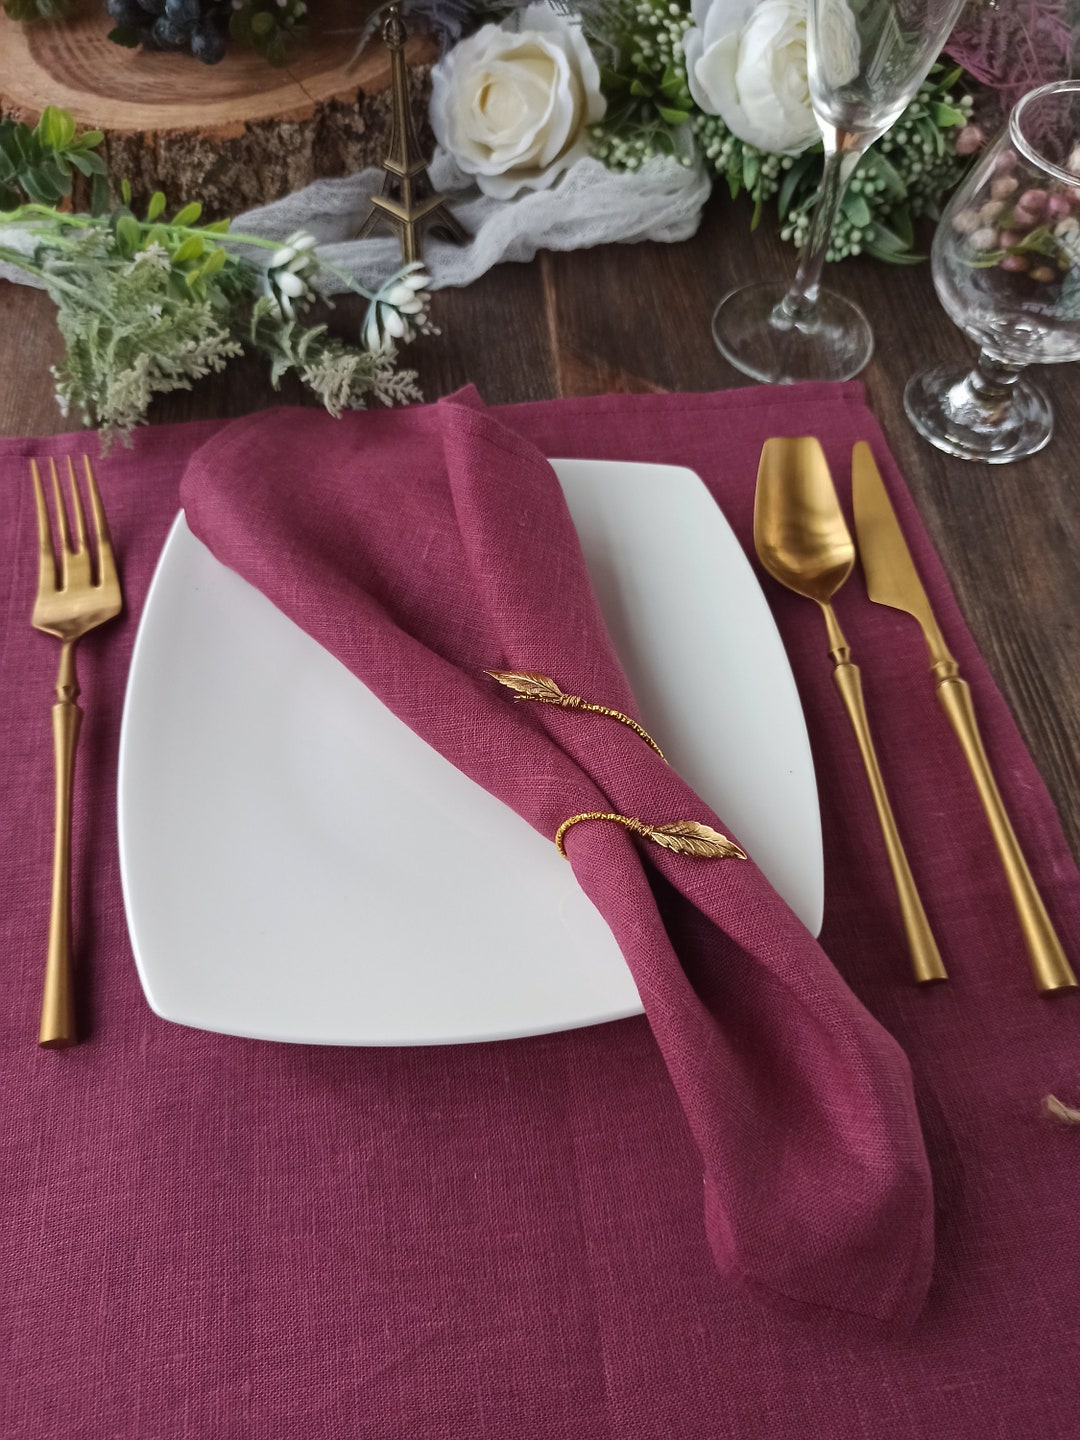 MLMC Handmade Cloth Napkins Bulk 17.7x17.7 Linen Dinner Napkins with  Fringe for Family Wedding Party Events Set of 8 Sand